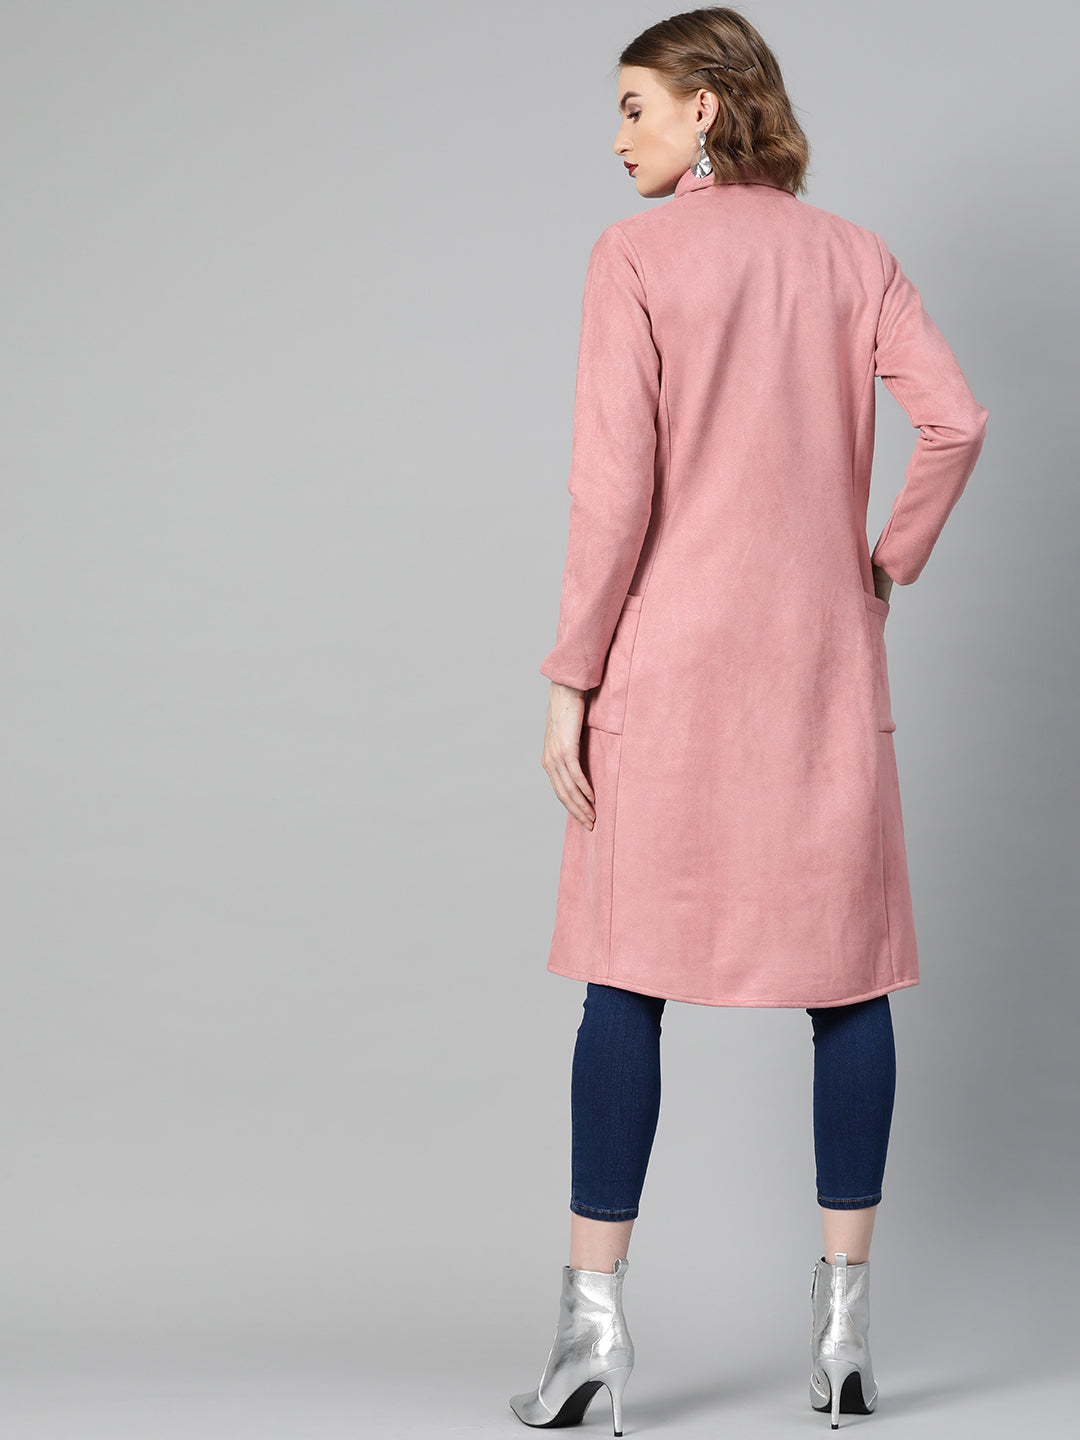 Athena Women Dusty Pink Suede Finish Solid Overcoat - Athena Lifestyle